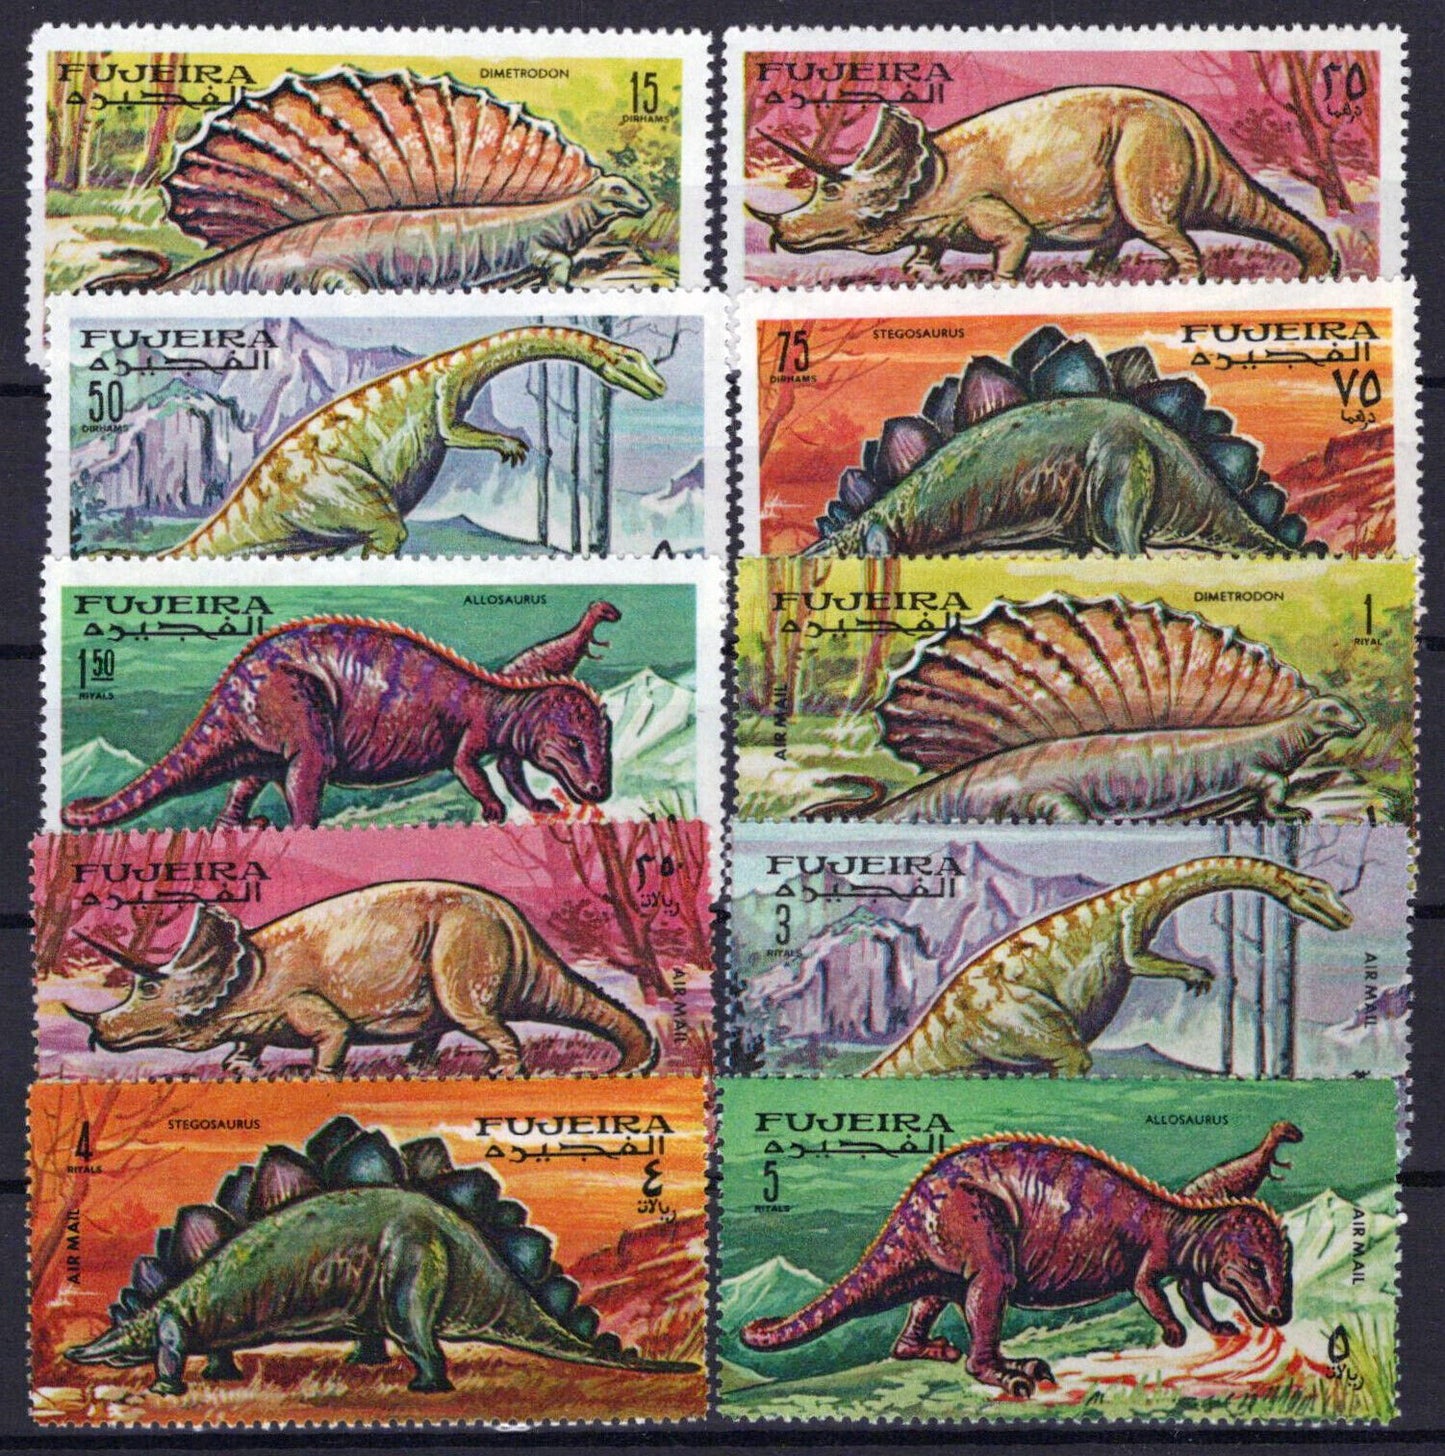 ZAYIX Fujeira 252-261 MH Dinosaurs Prehistoric Animals 042523S42